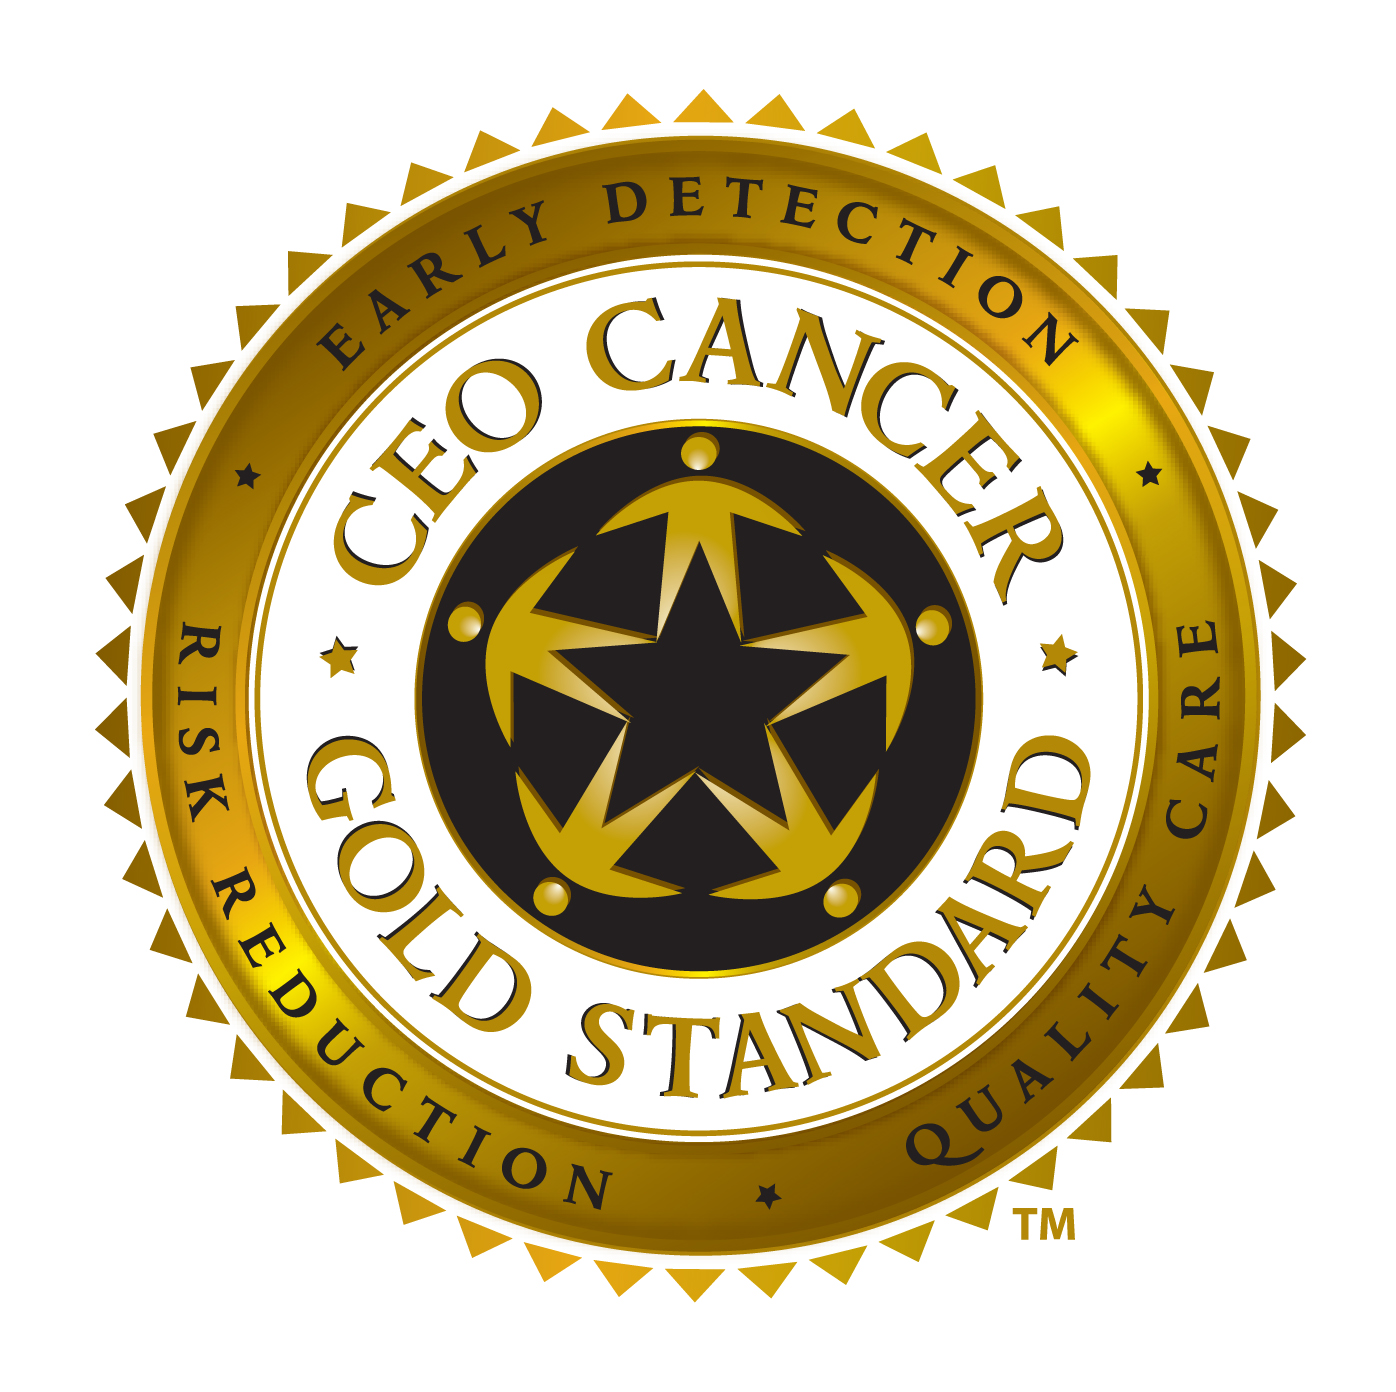 Cancer Gold Standard logo.jpg